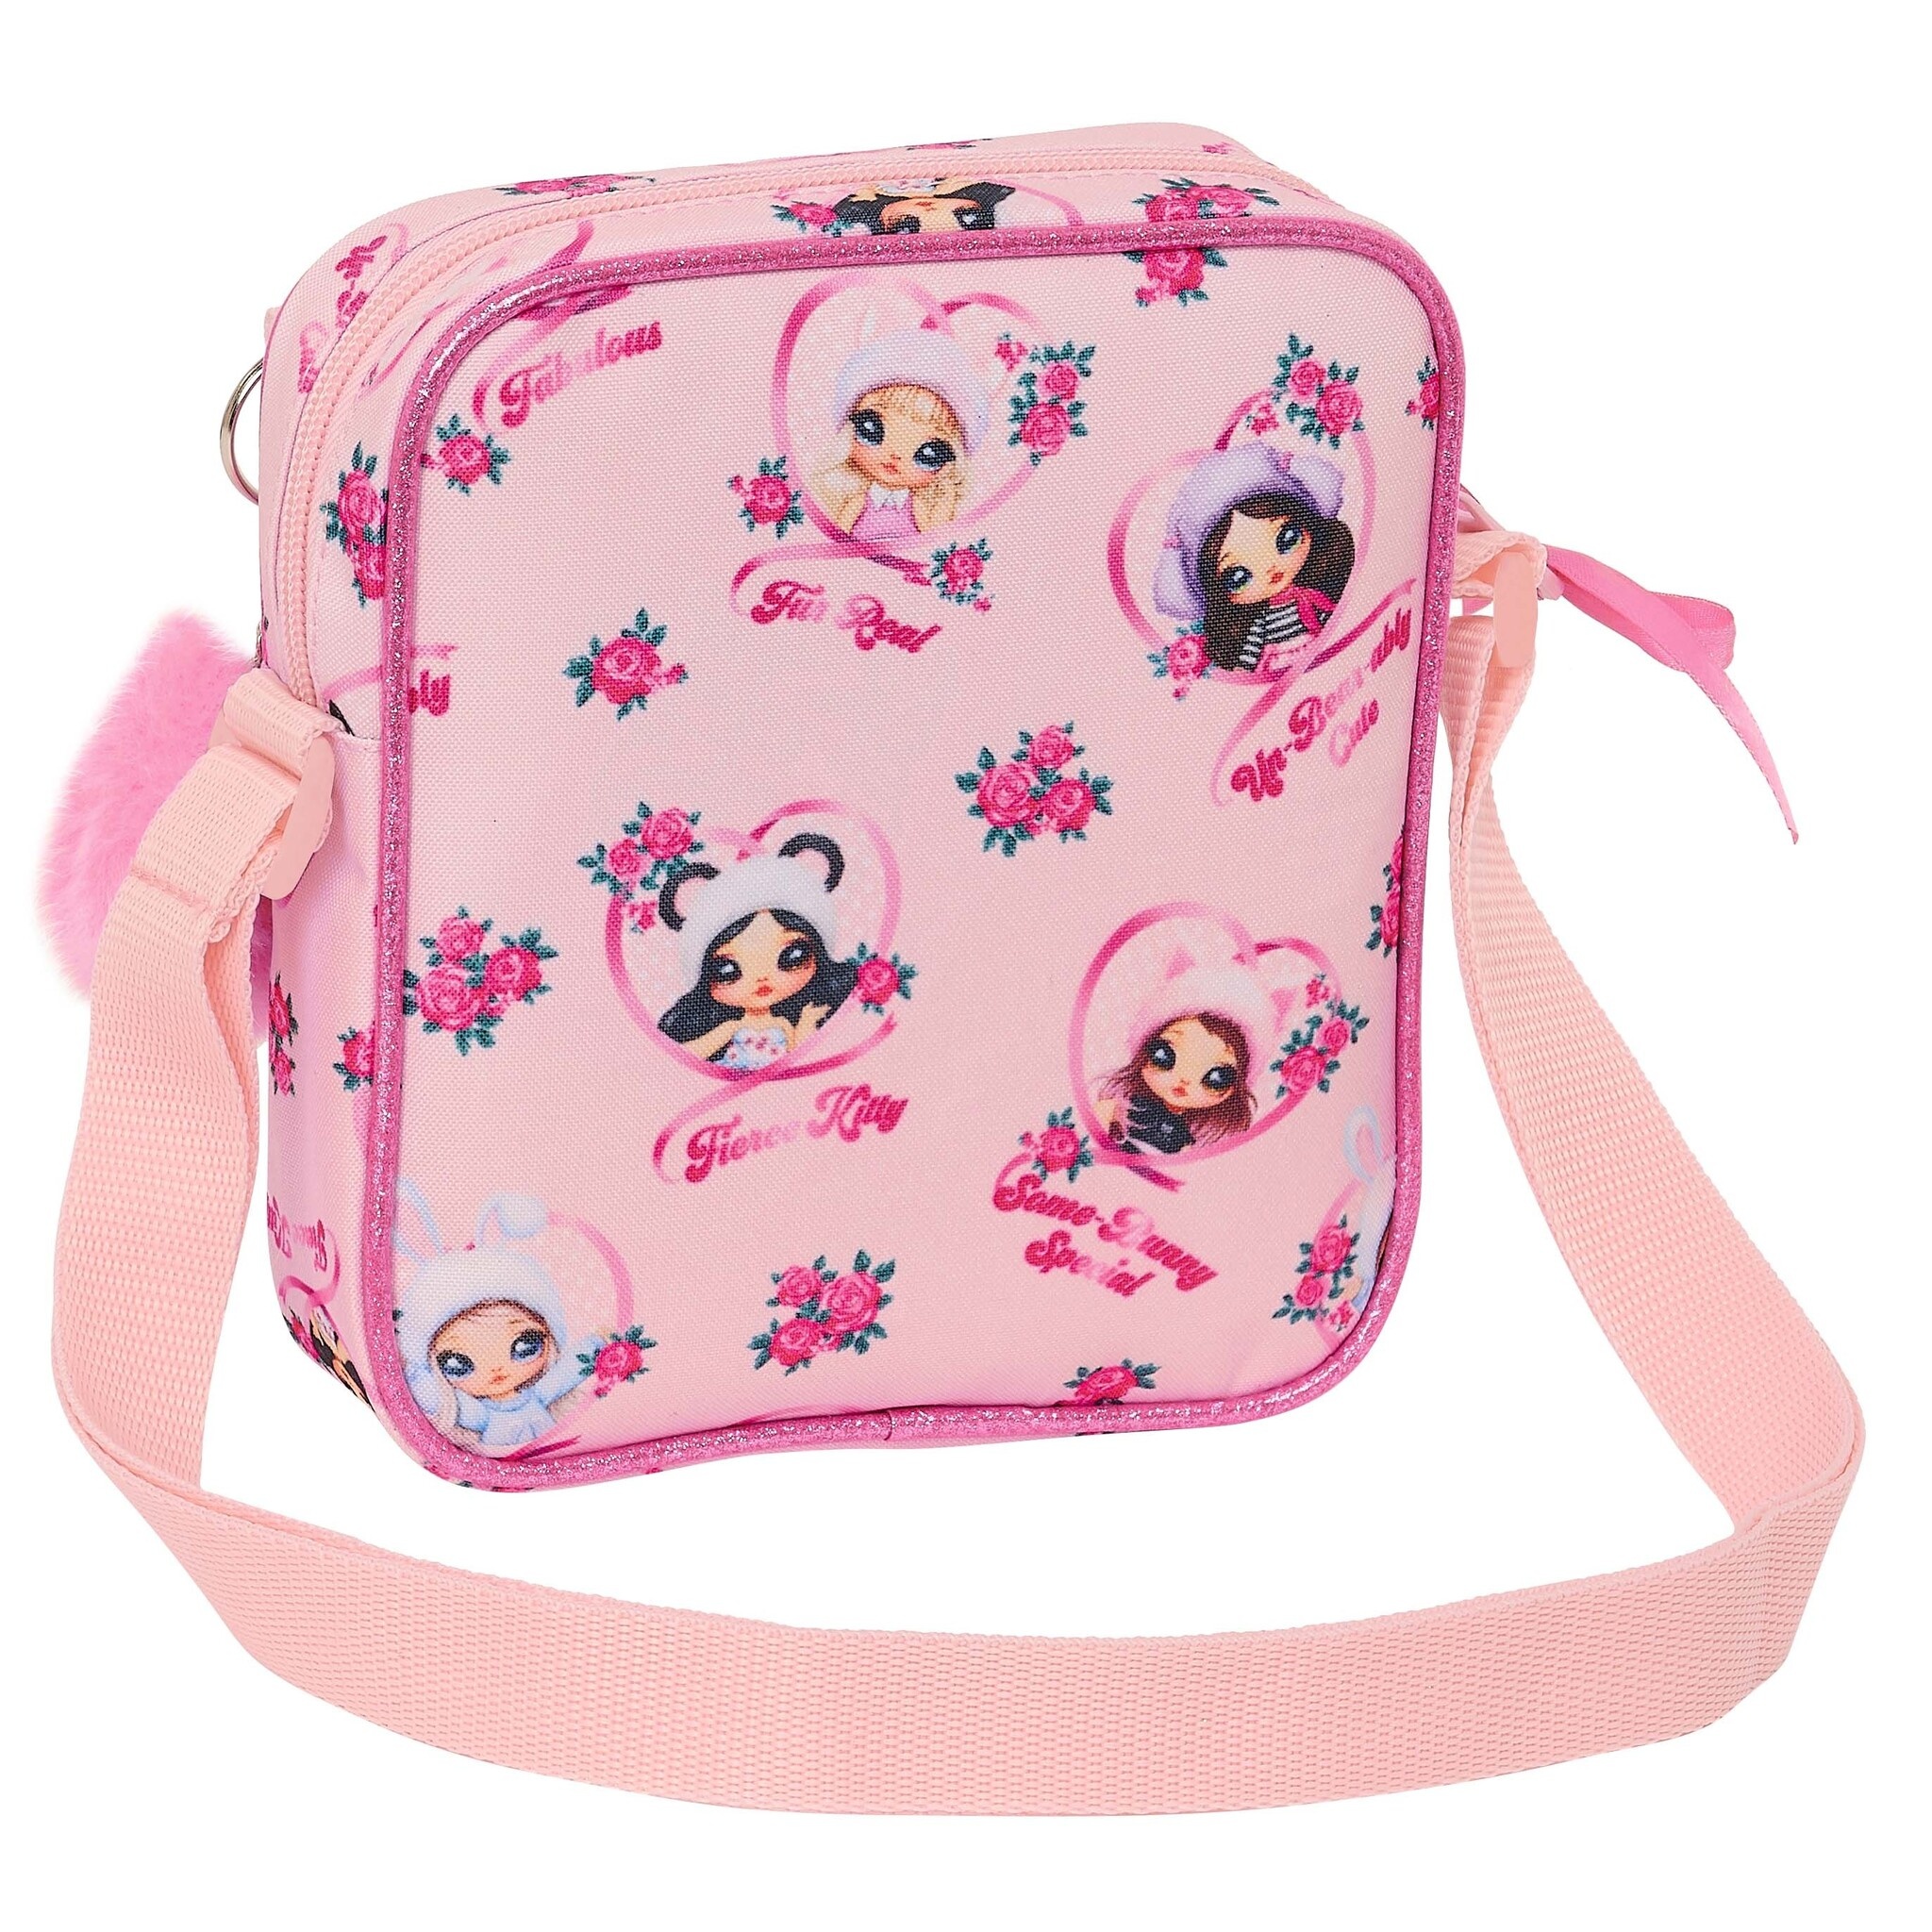 Na! Na! Na! Surprise Mini Shoulder Bag, Fabulous - 18 x 16 x 4 cm - Polyester